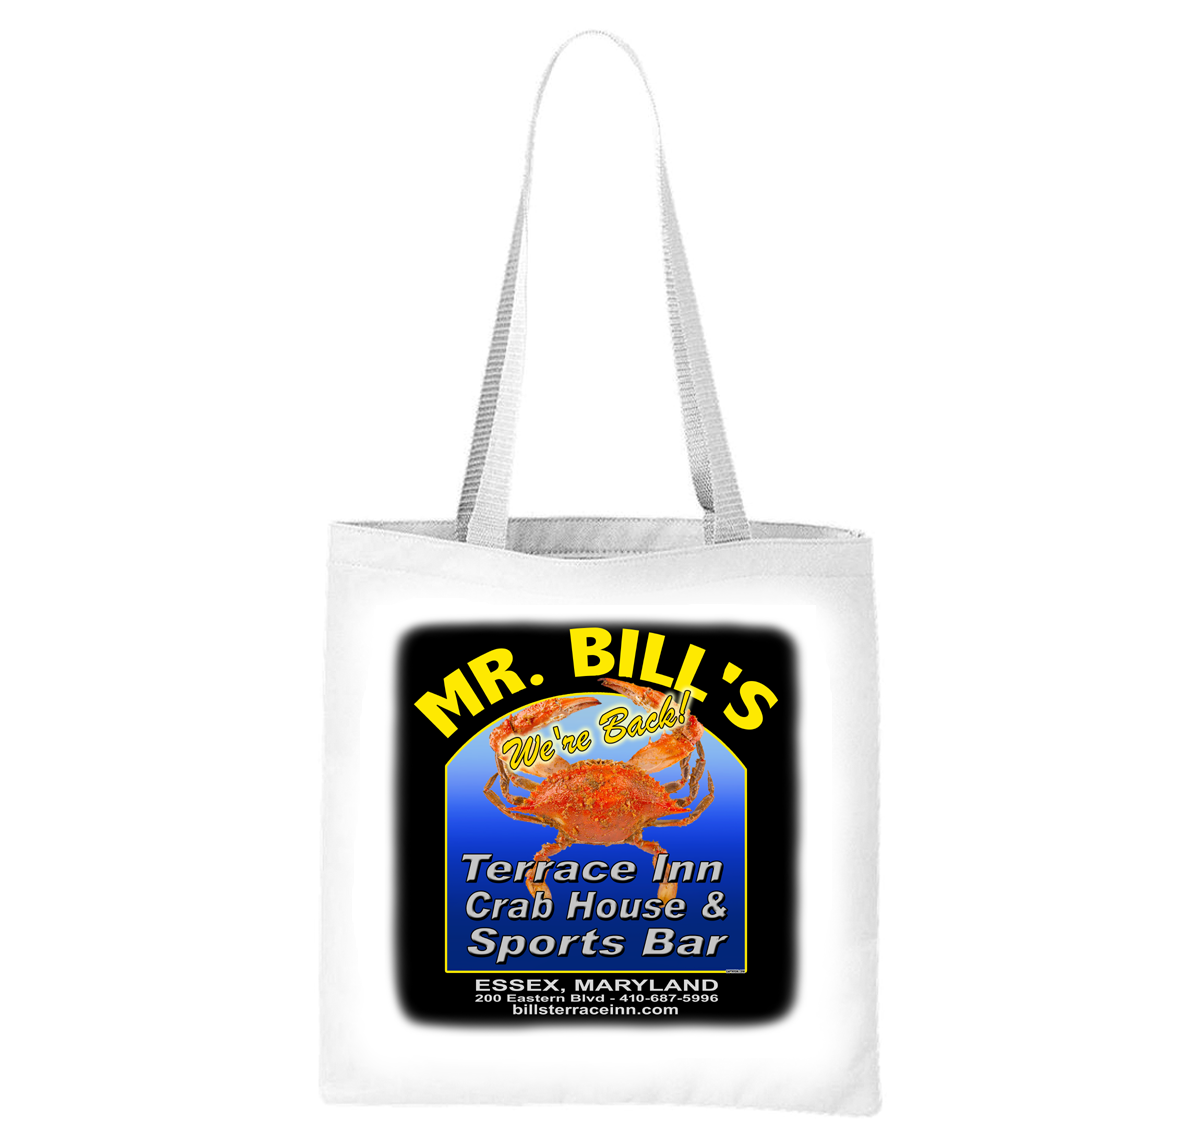 Mr. Bill's Terrace Inn - We're Back Liberty Bag